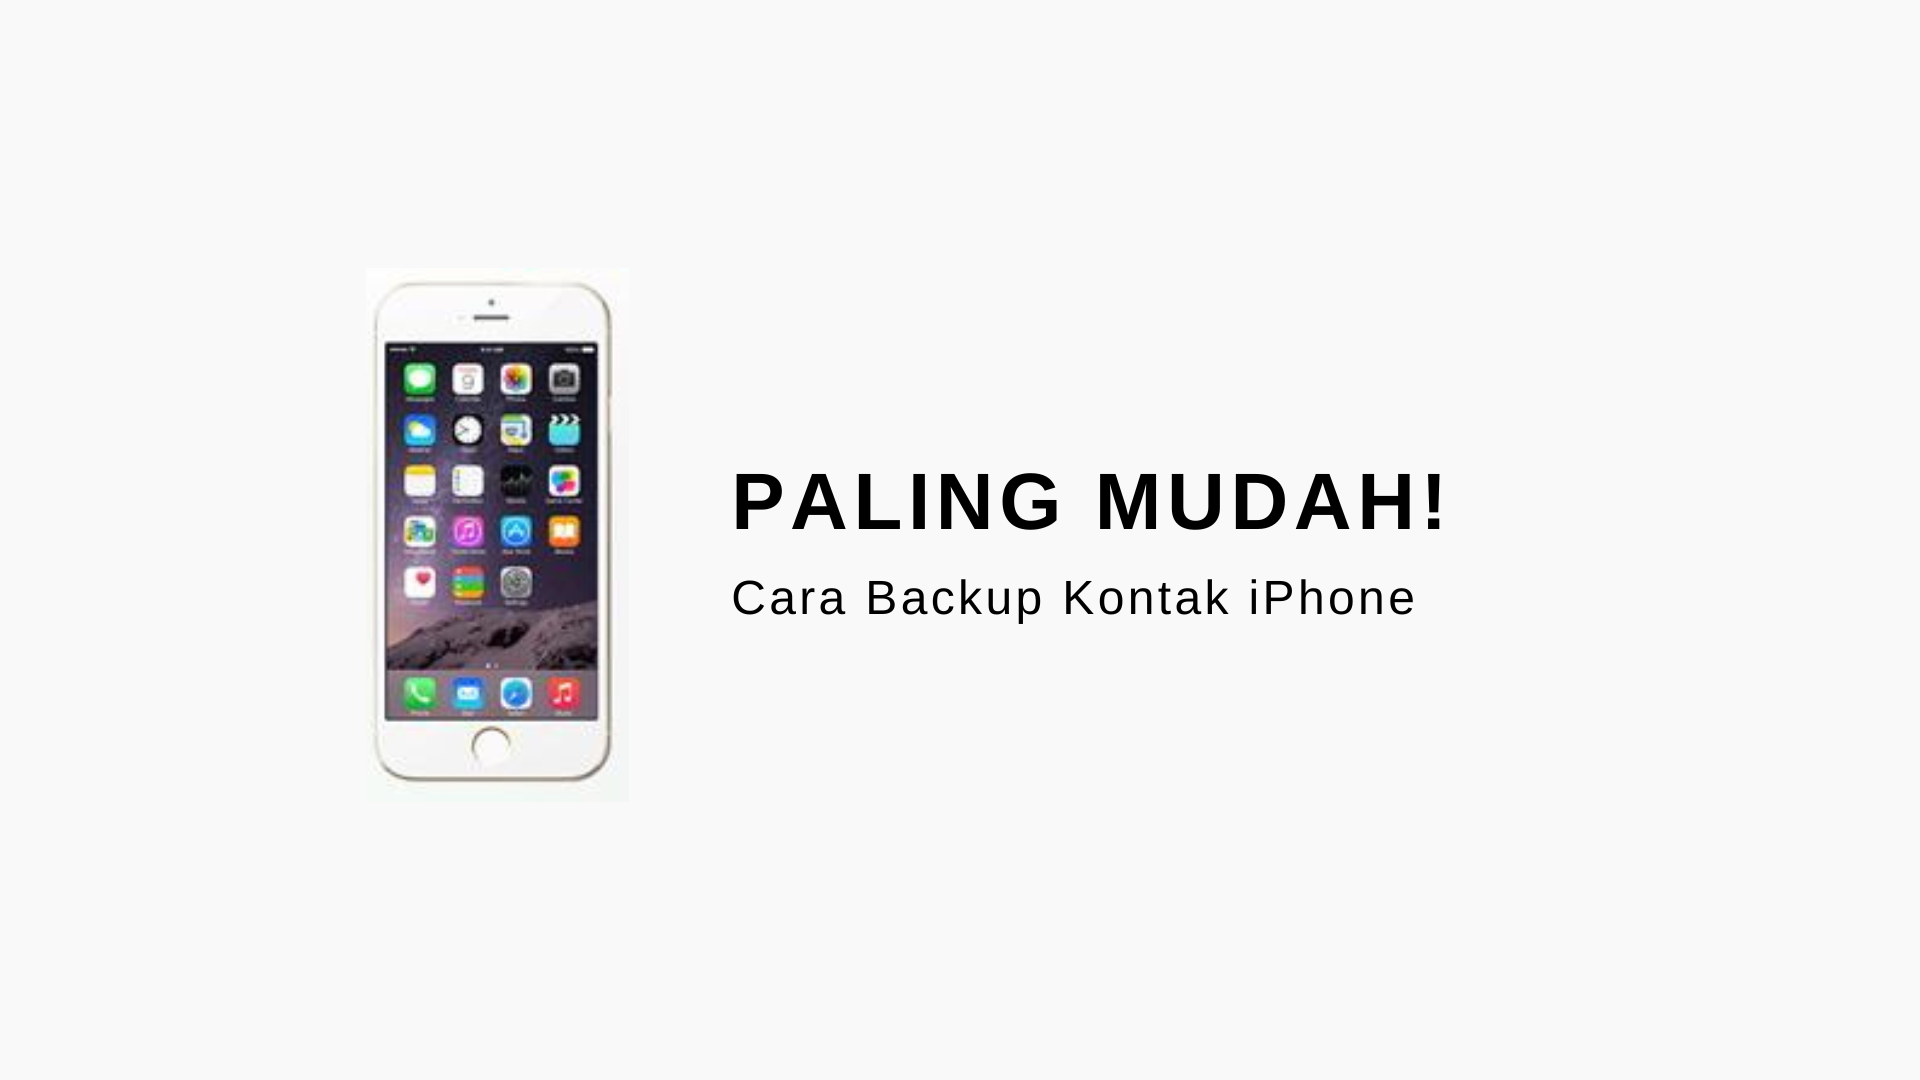 PALING MUDAH! Cara Backup Kontak iPhone